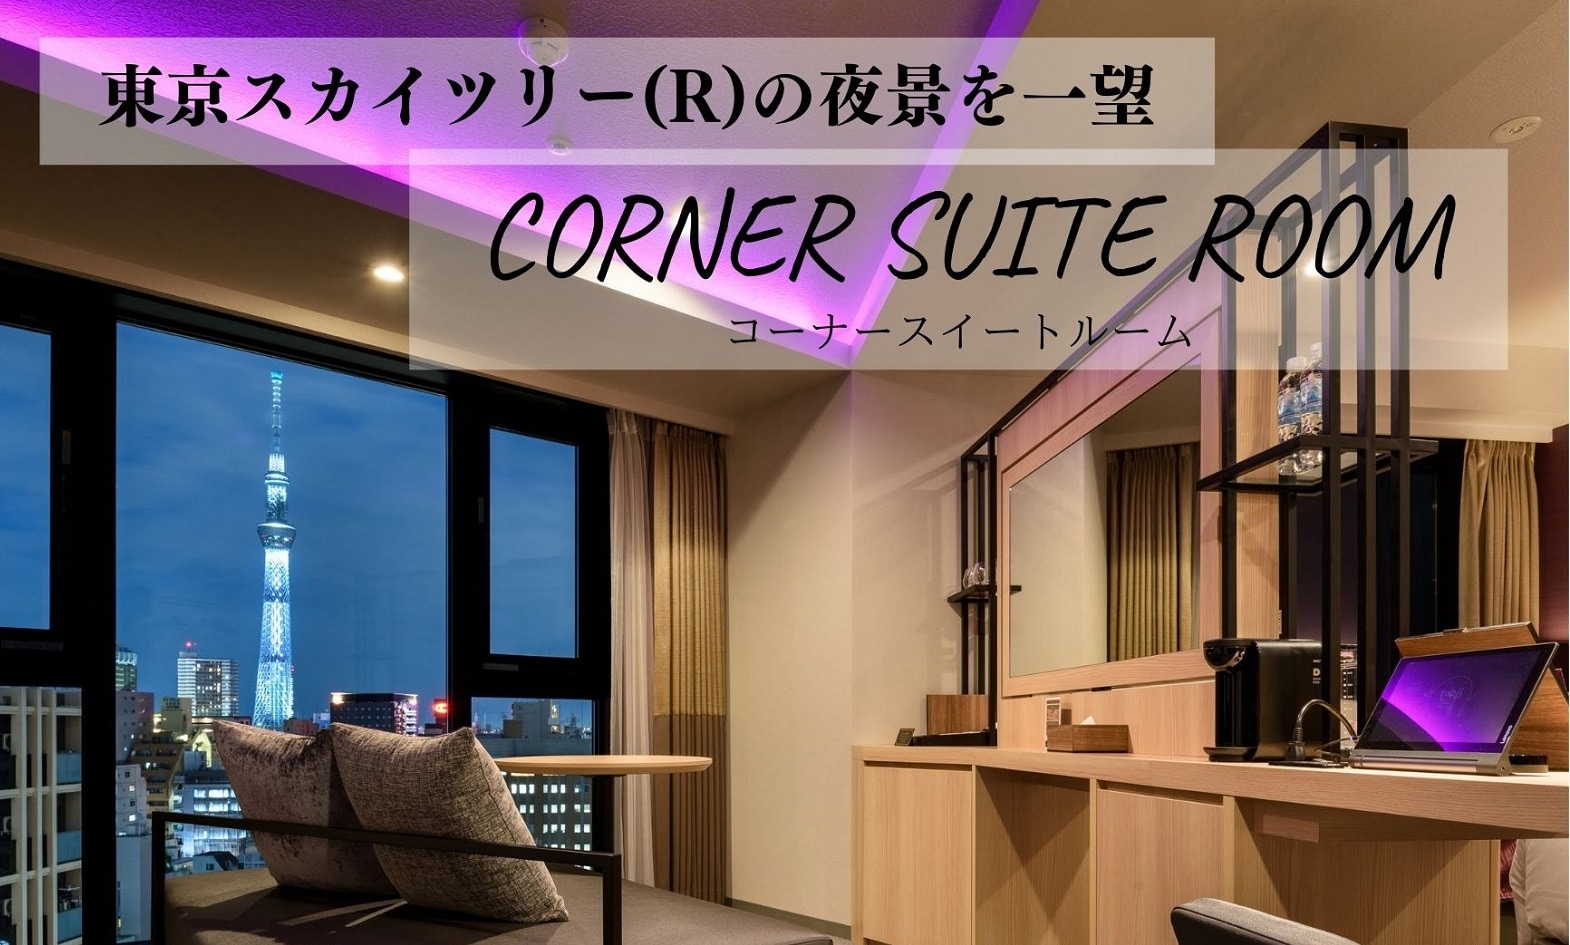 Corner suite room